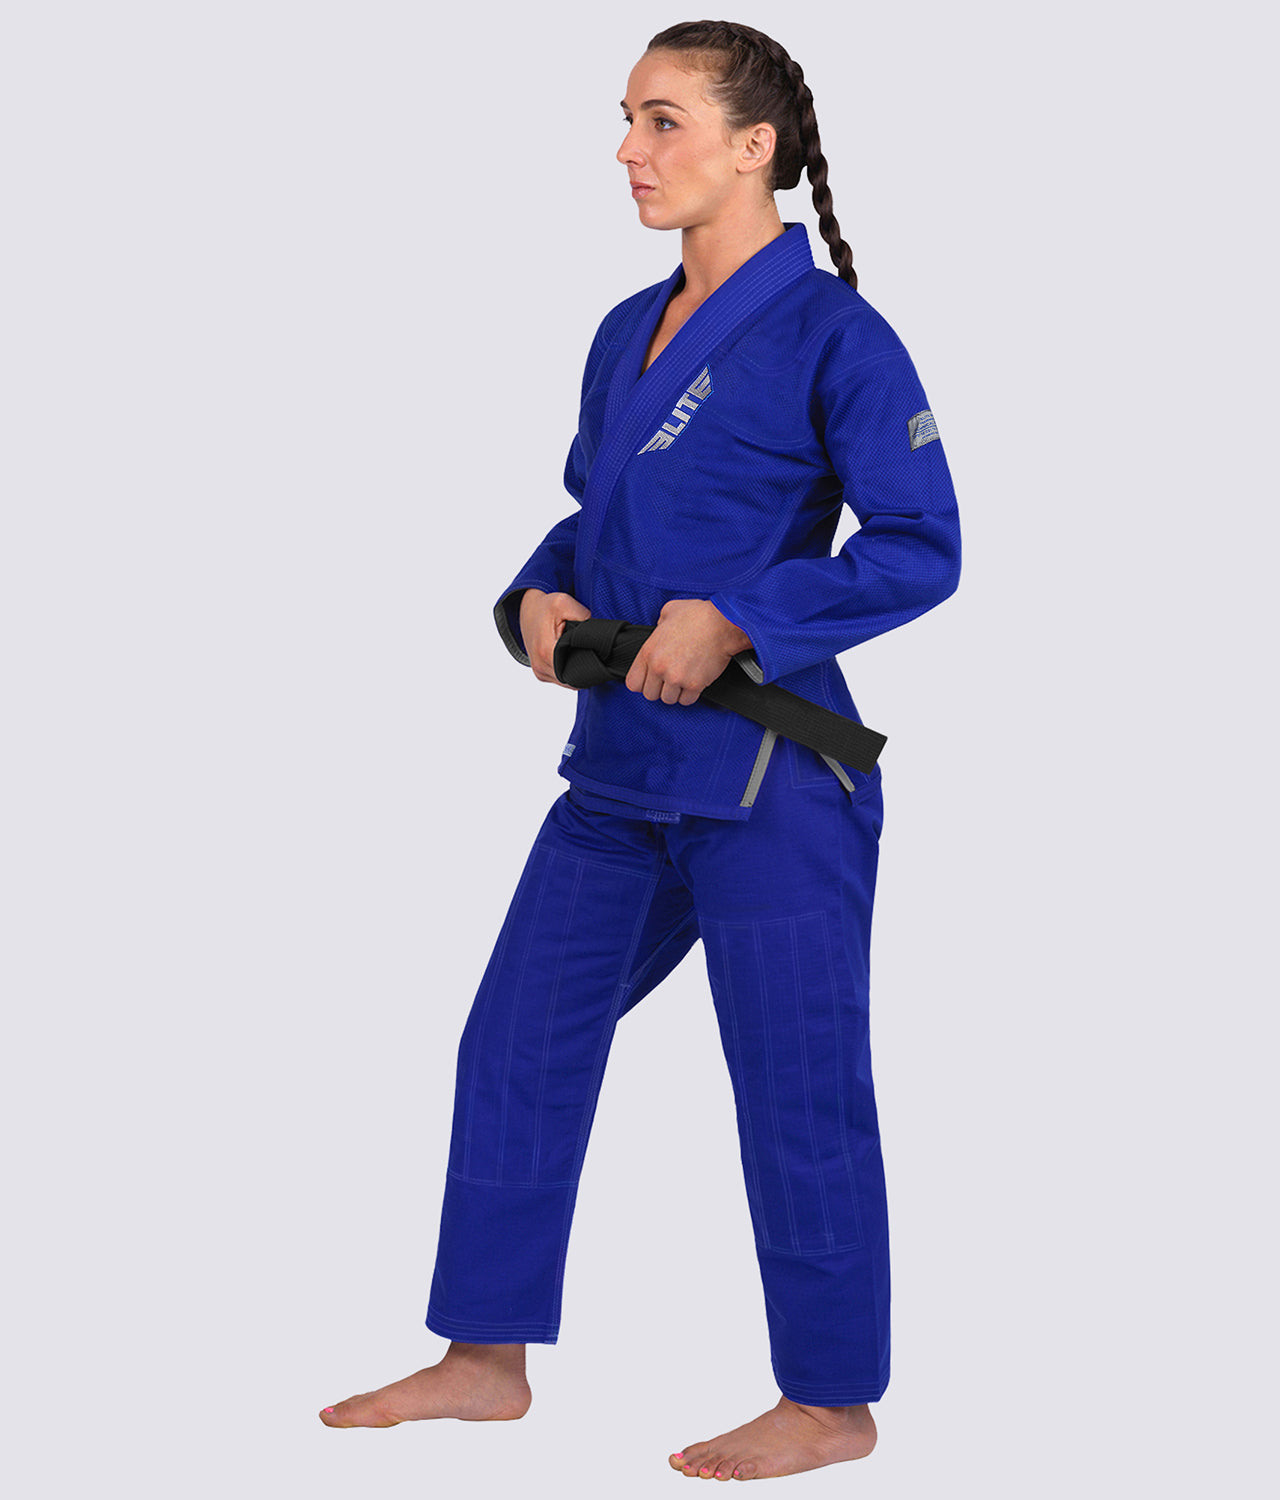 Elite Sports Women's Core Blue Brazilian Jiu Jitsu BJJ Gi